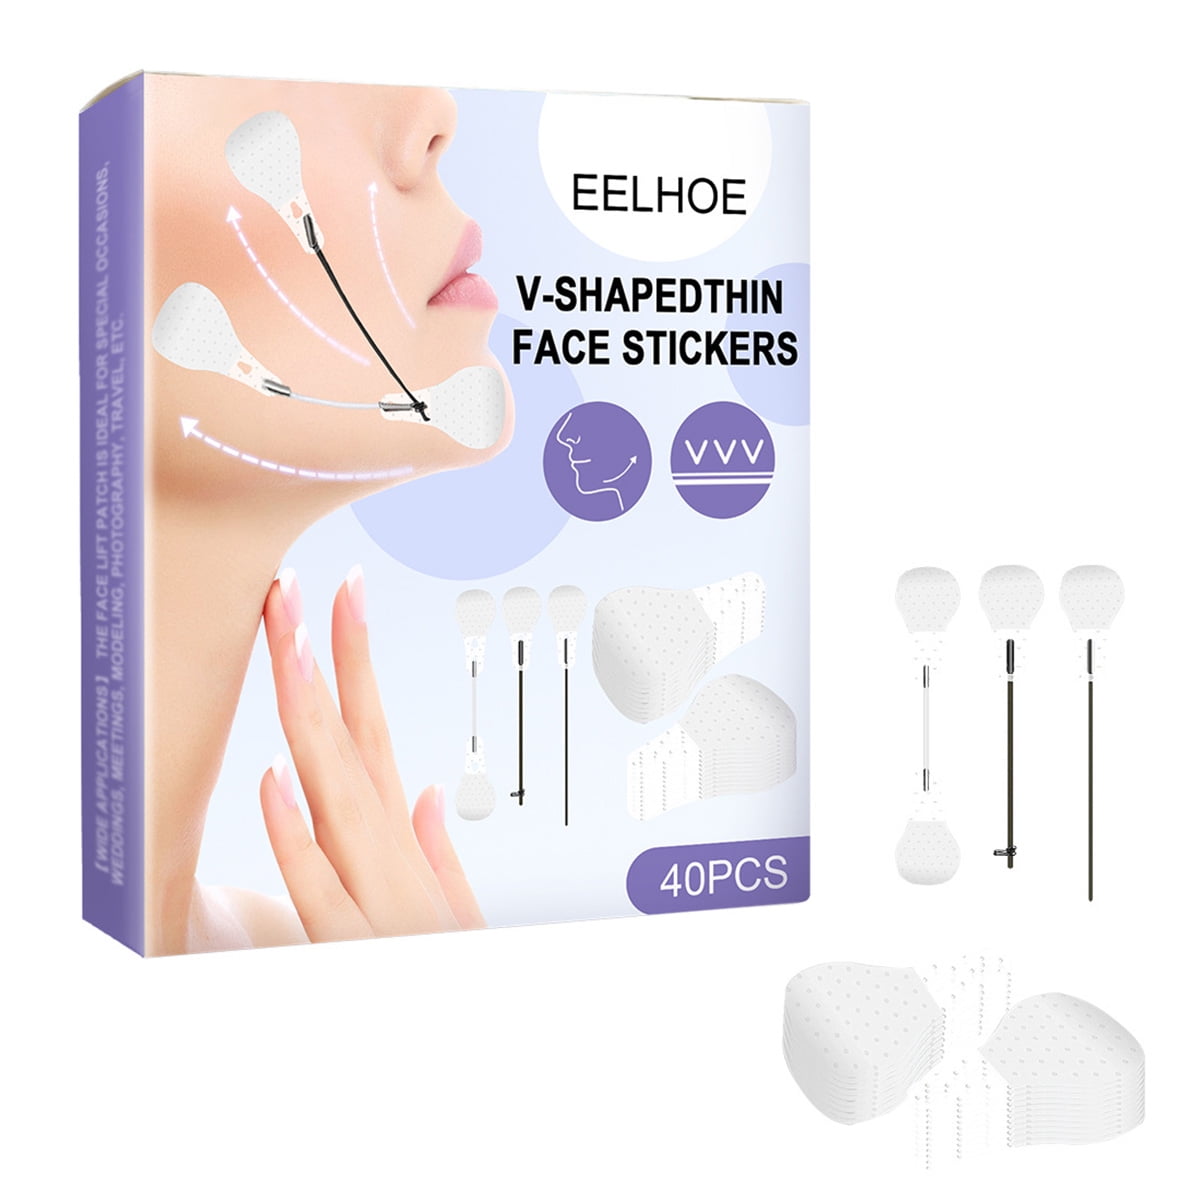 Face Lifting Tape 60 Stück Face Tape, FaceLift Tape Unsichtbar Lift Gesicht  Aufkleber Sofortige V-Form Gesicht Face Lift Patch Wrinkle Patch Makeup